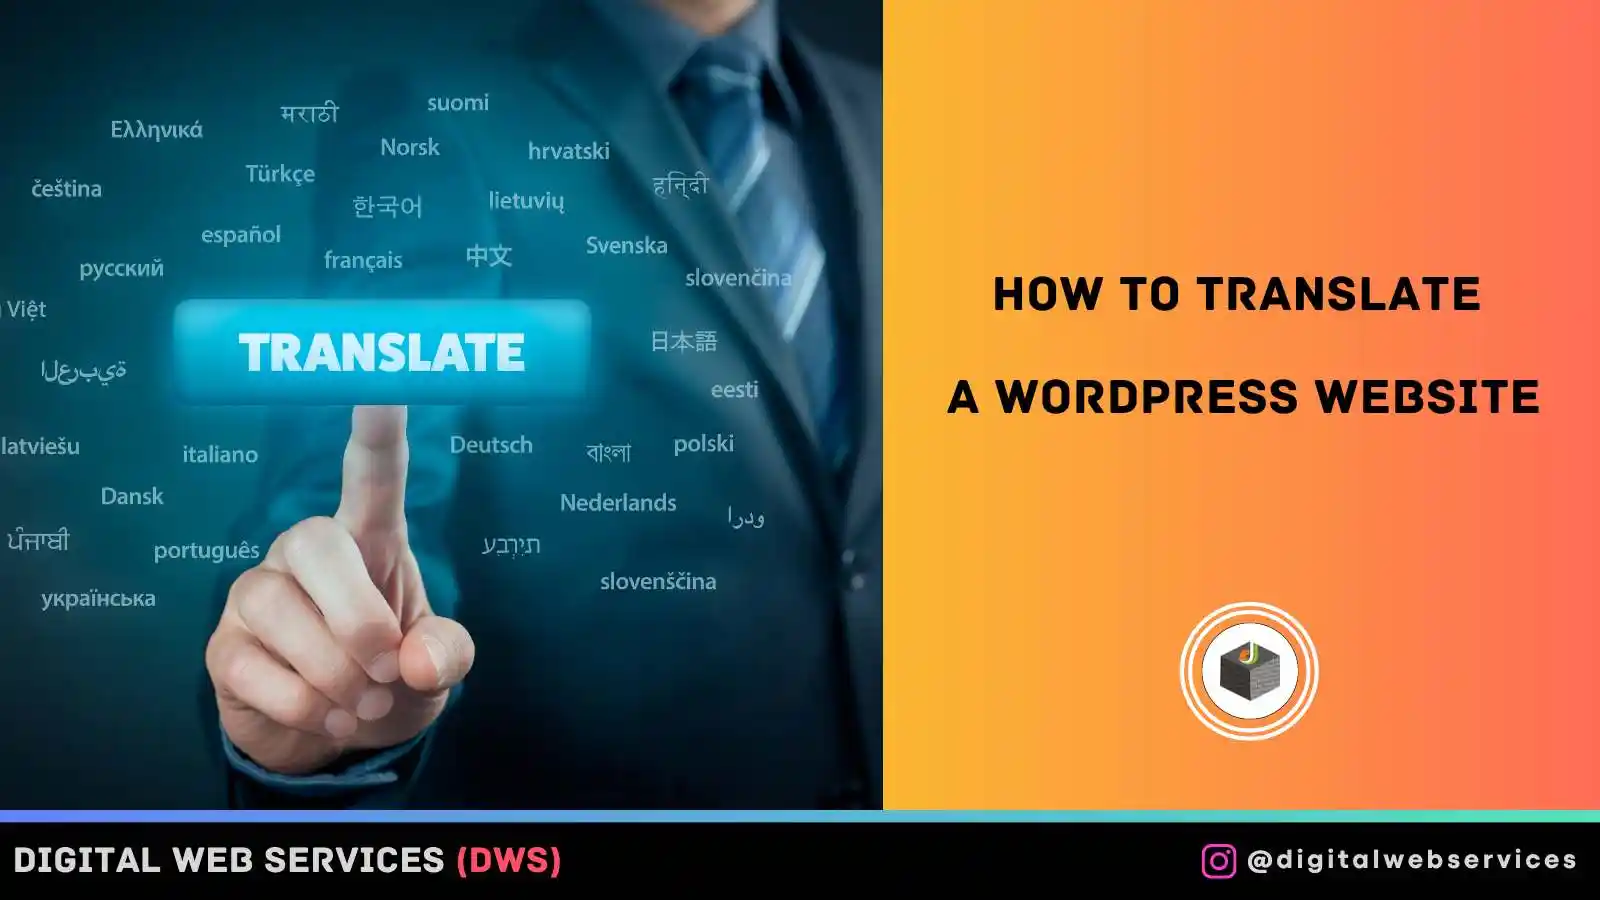 How to Translate a WordPress Website